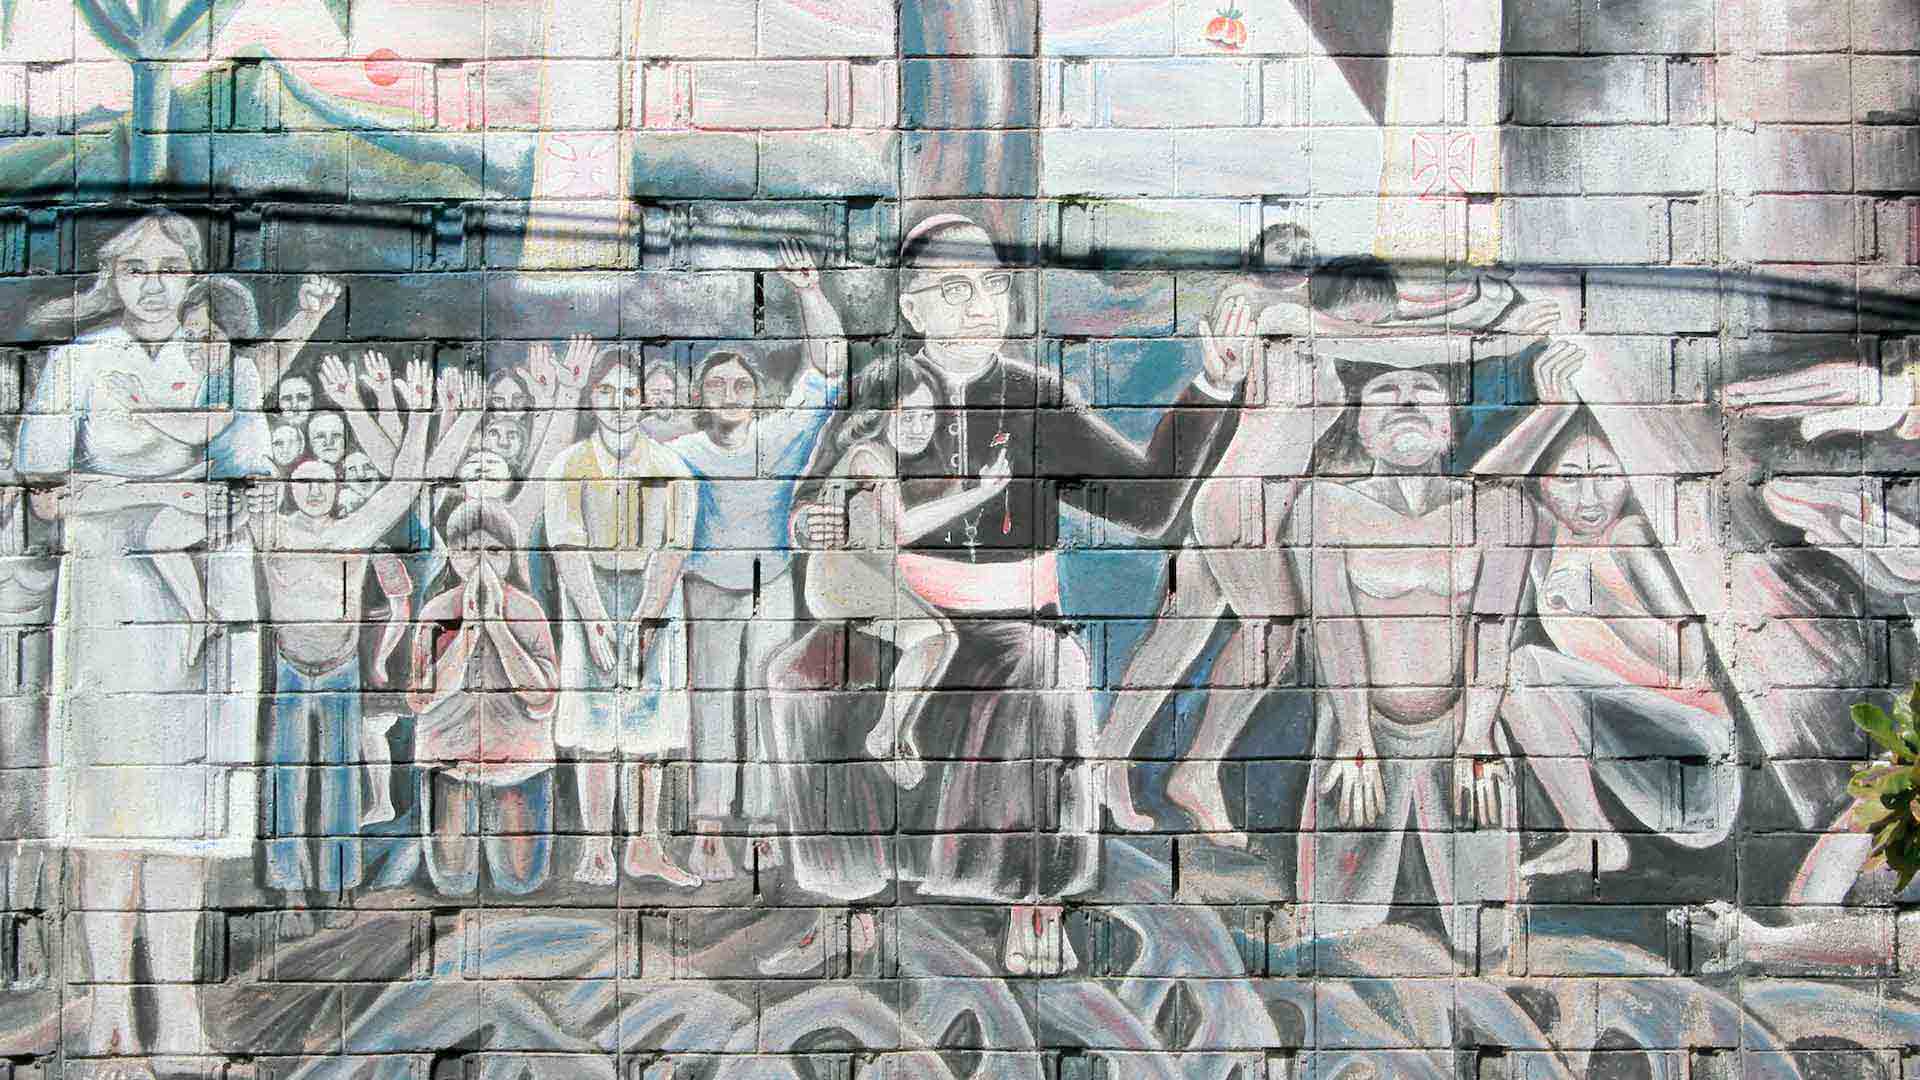 Mural by artist Oscar Romero